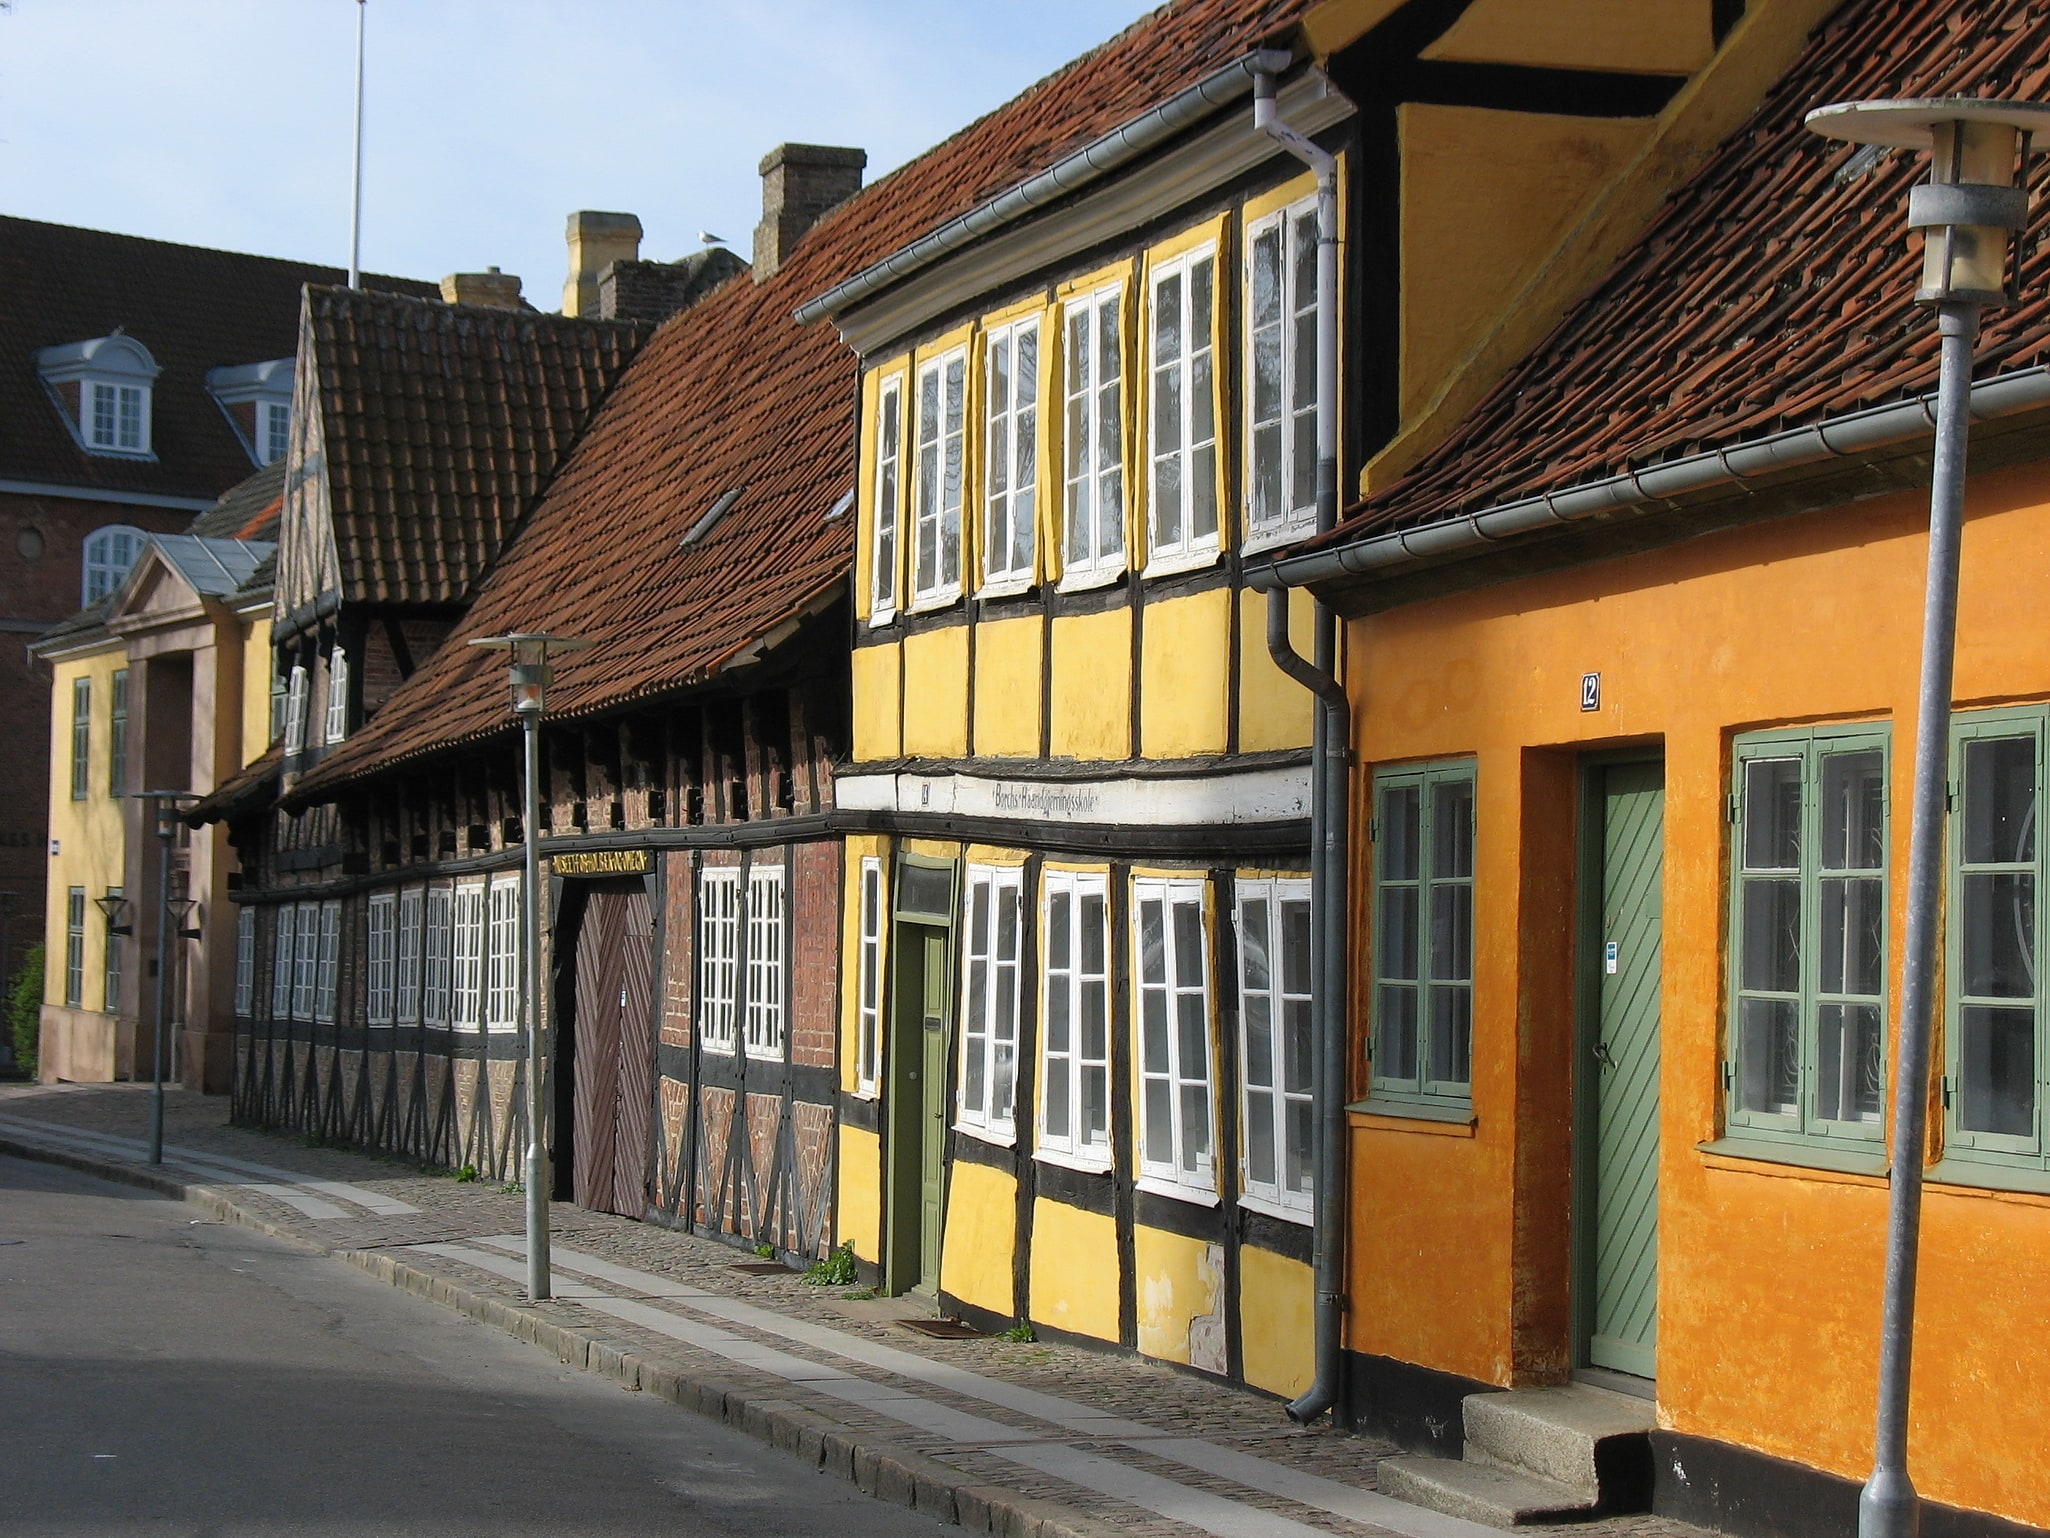 Holbæk, Denmark